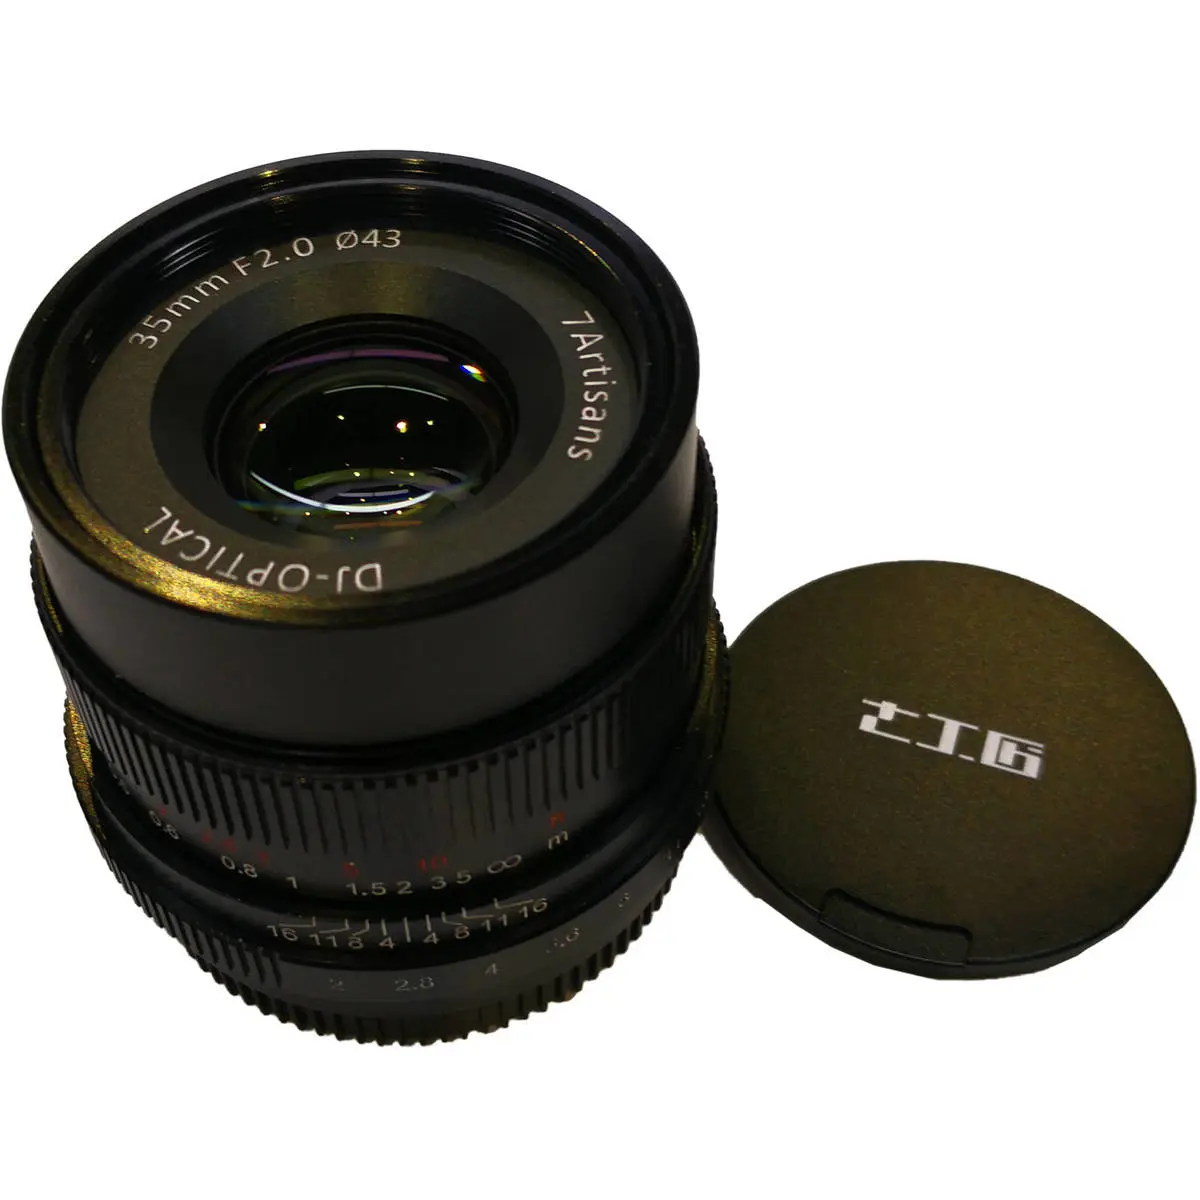 3. 7Artisans 35mm F2.0 MF (Fuji X) Black (A203B) Lens